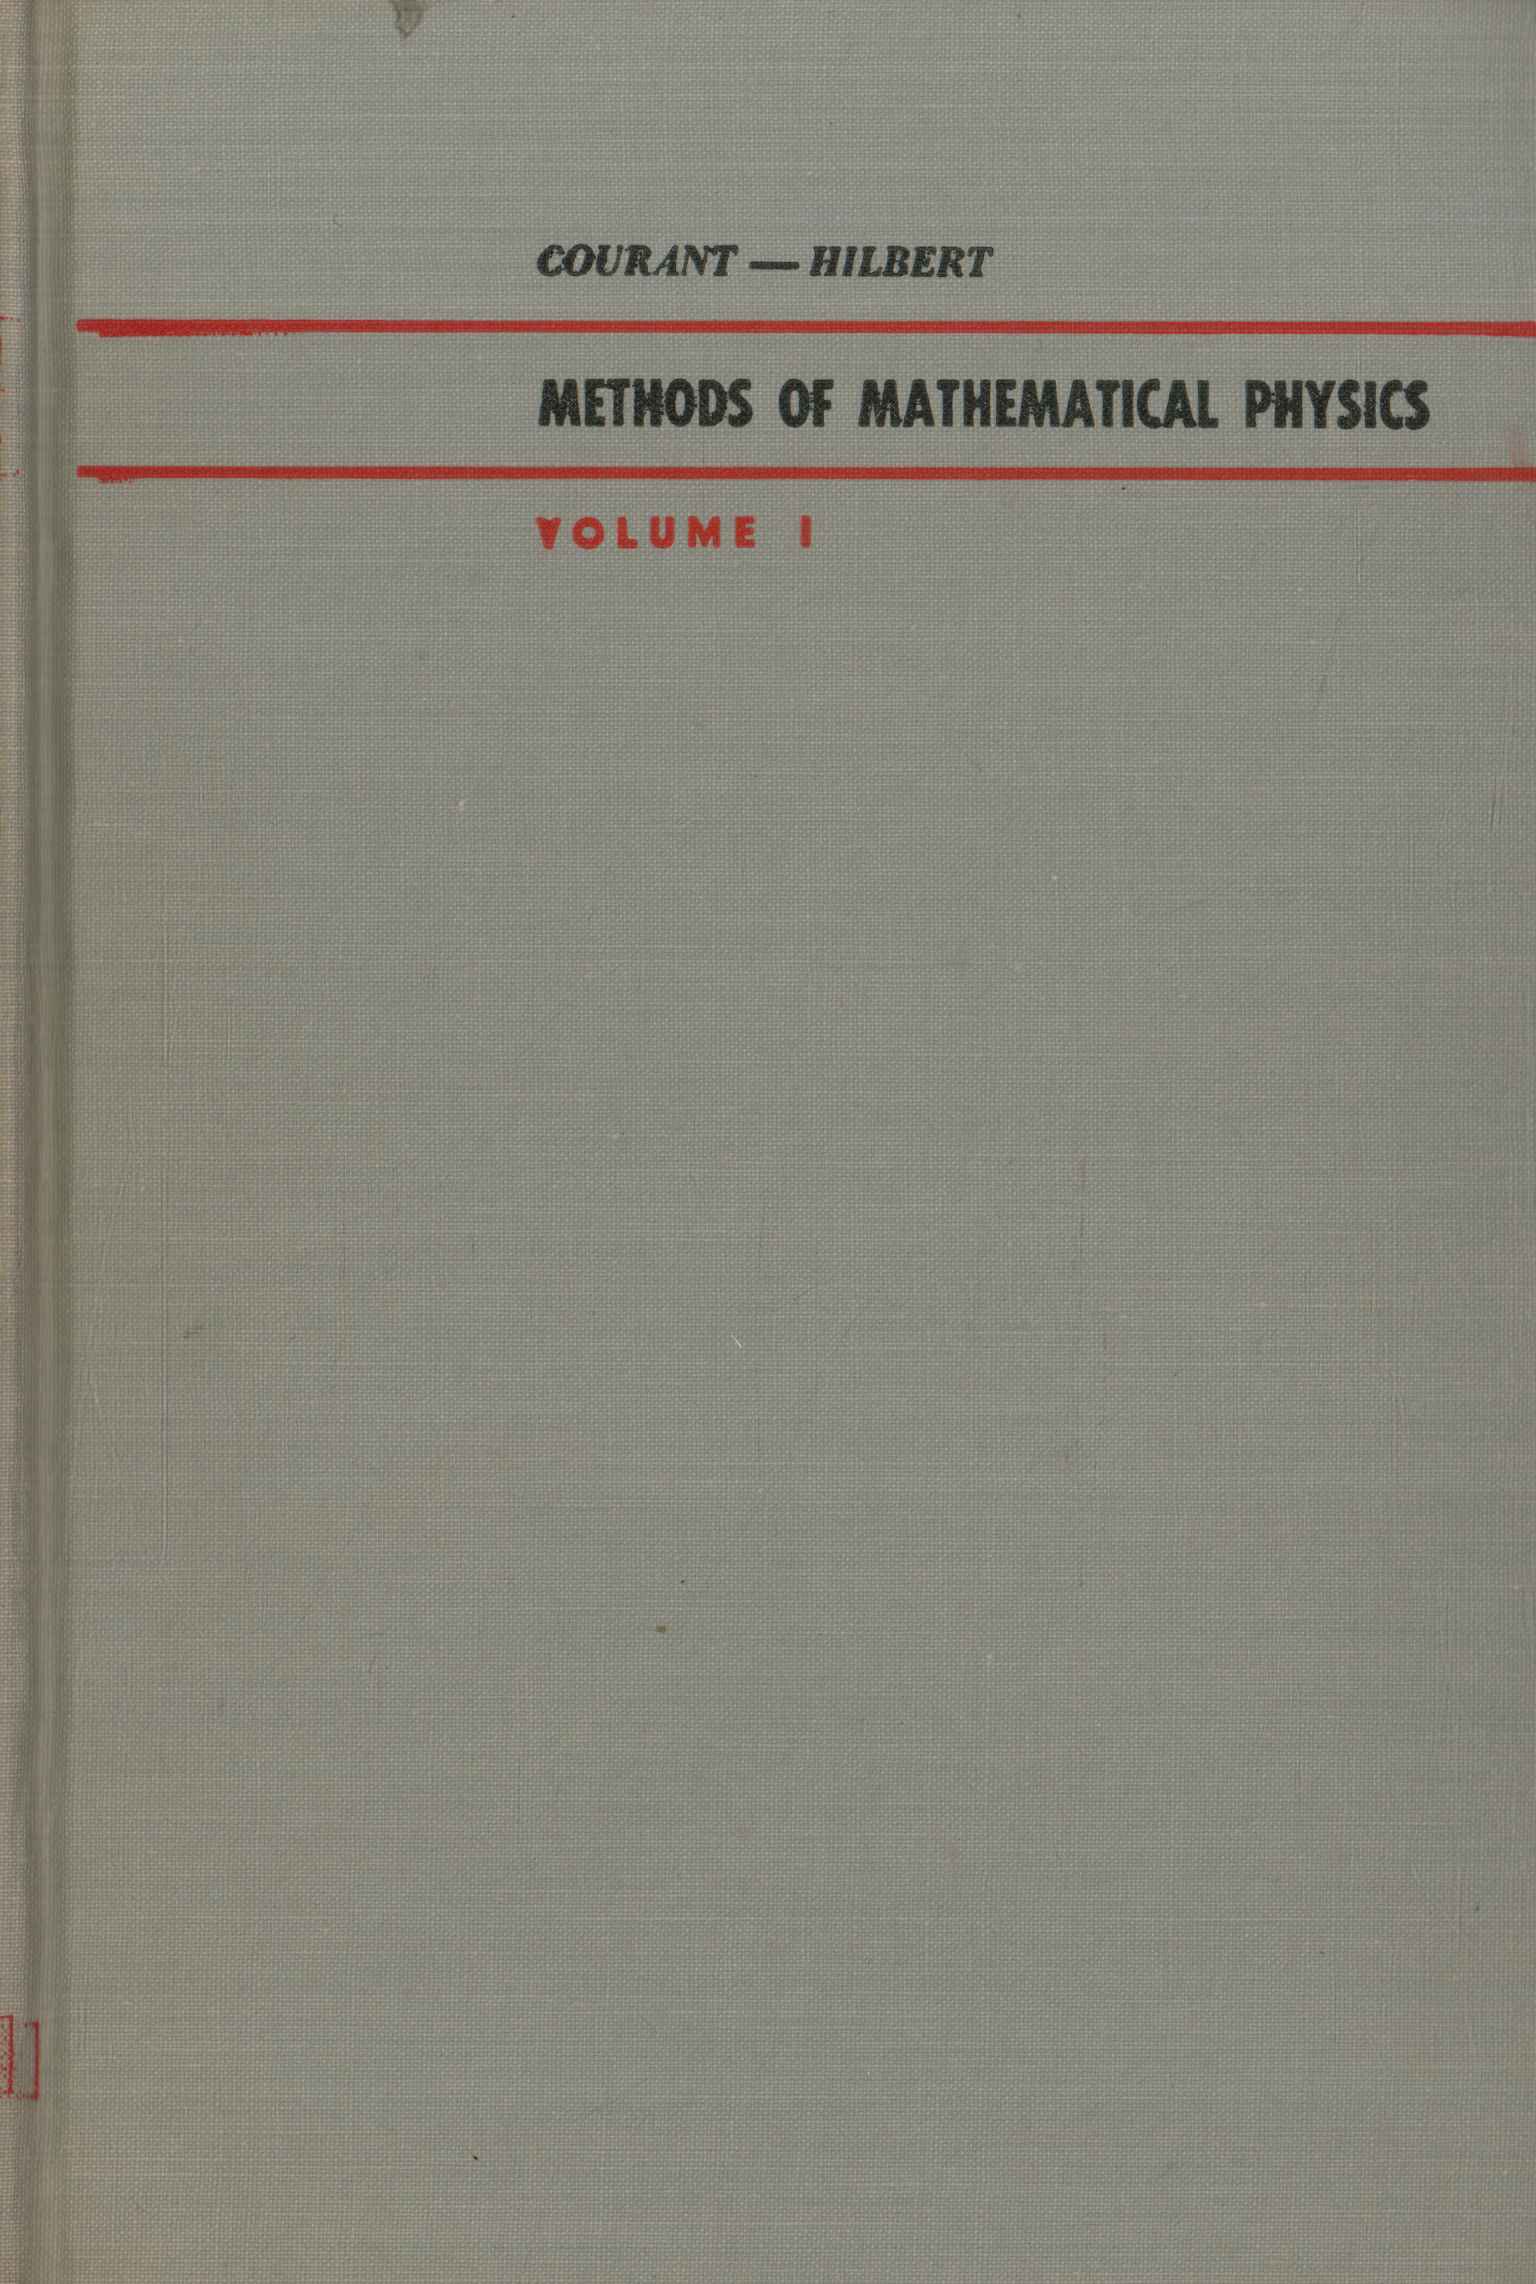 Methods of mathematical physics (Volume